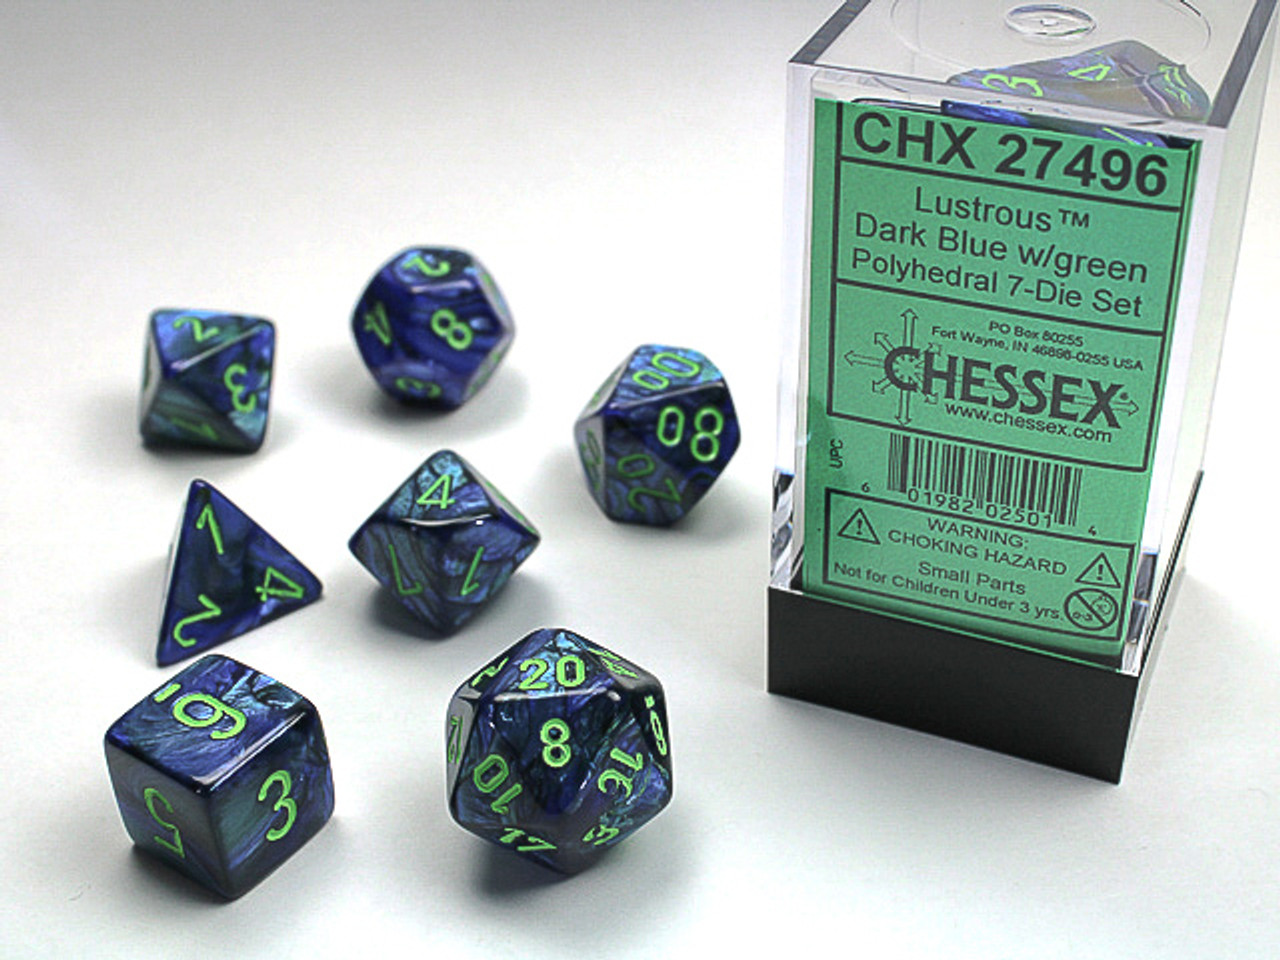 27496 - Lustrous® Polyhedral Dark Blue w/green 7-Die Set